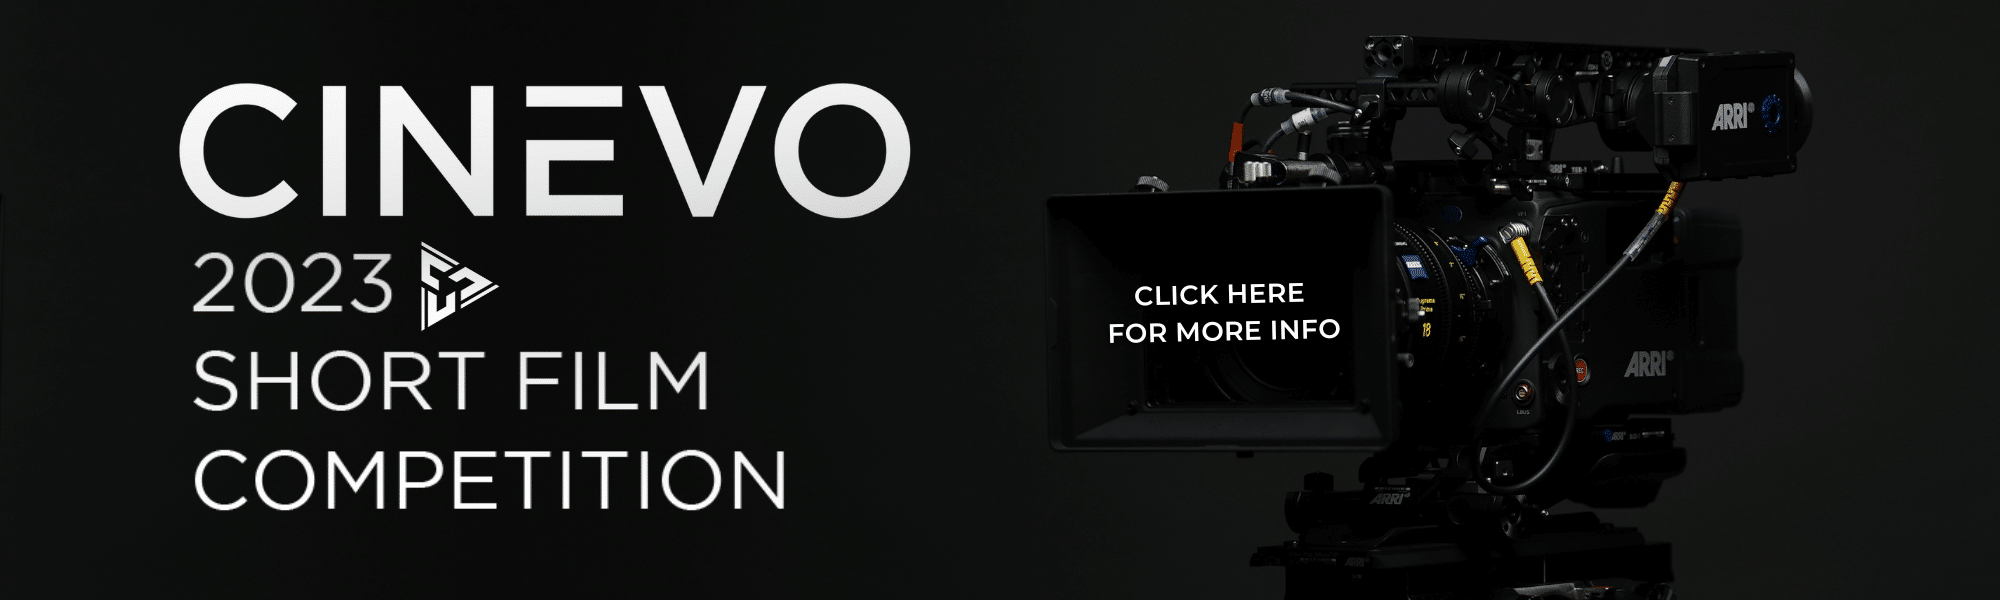 Cinevo - 2023 Short Film Competition - Camera Rental